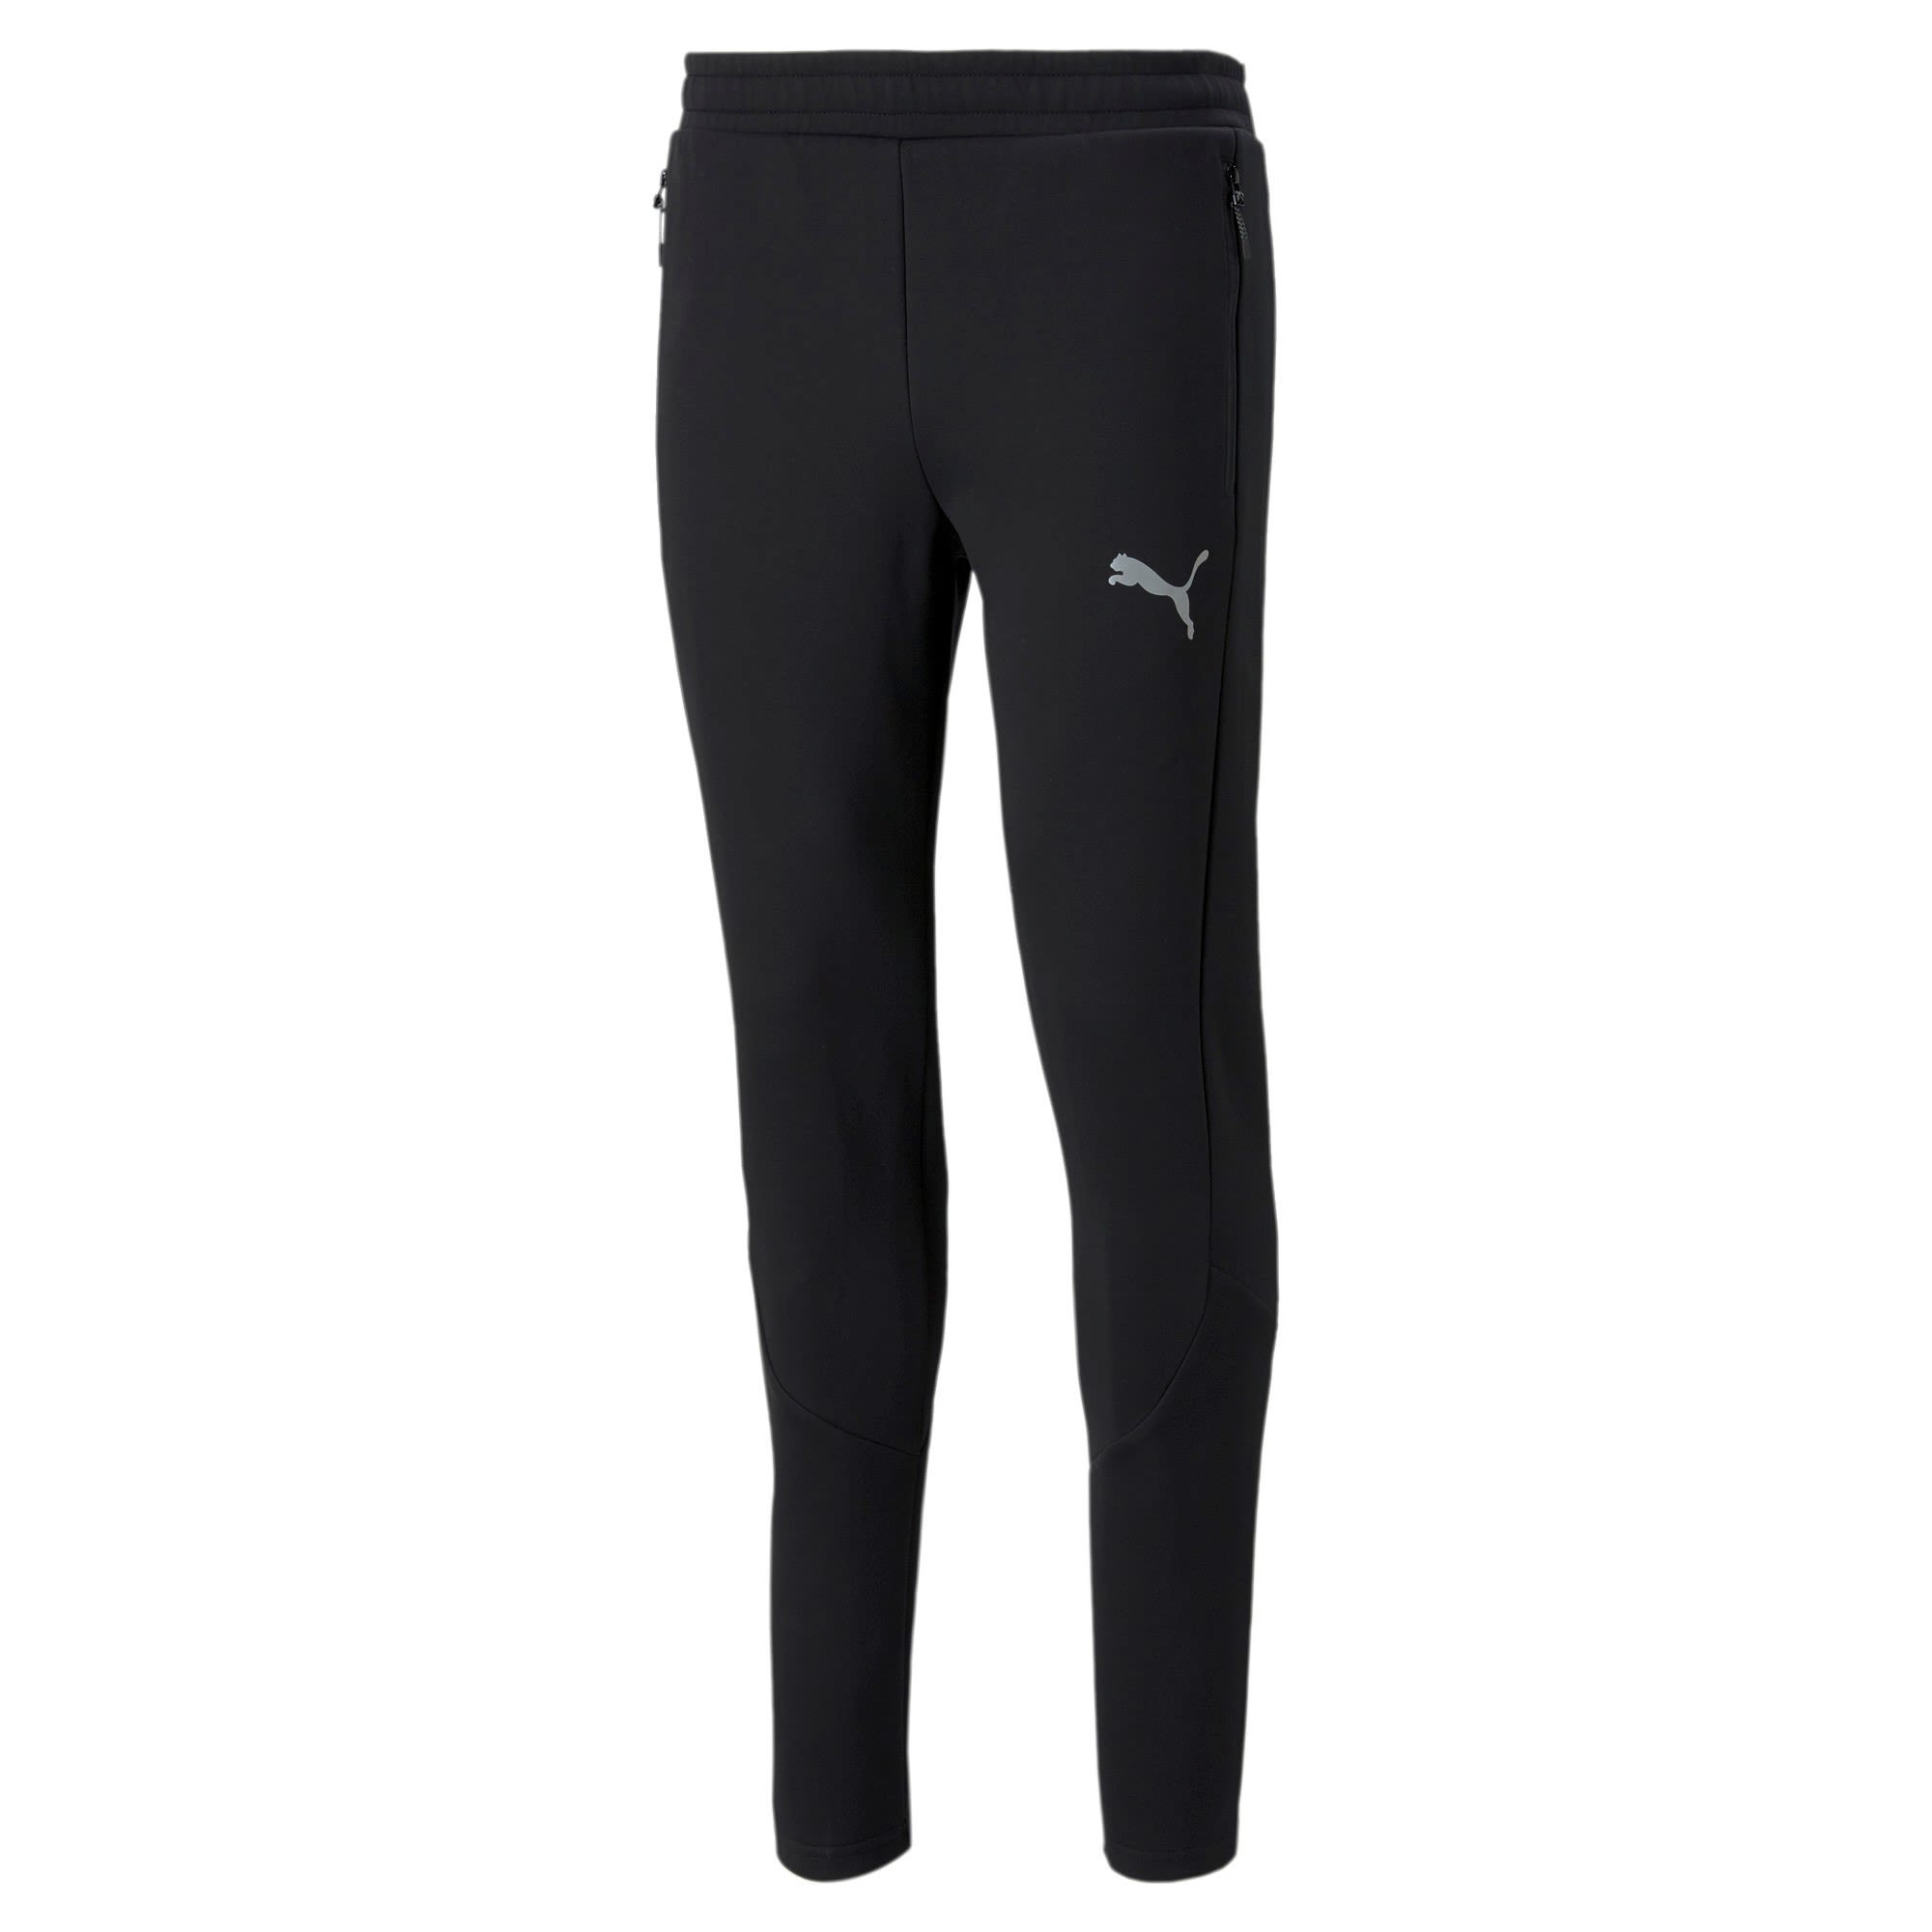 Puma Evostripe Pants Schwarz- Male Softshellhosen- Grsse 3XL - Farbe Puma Black